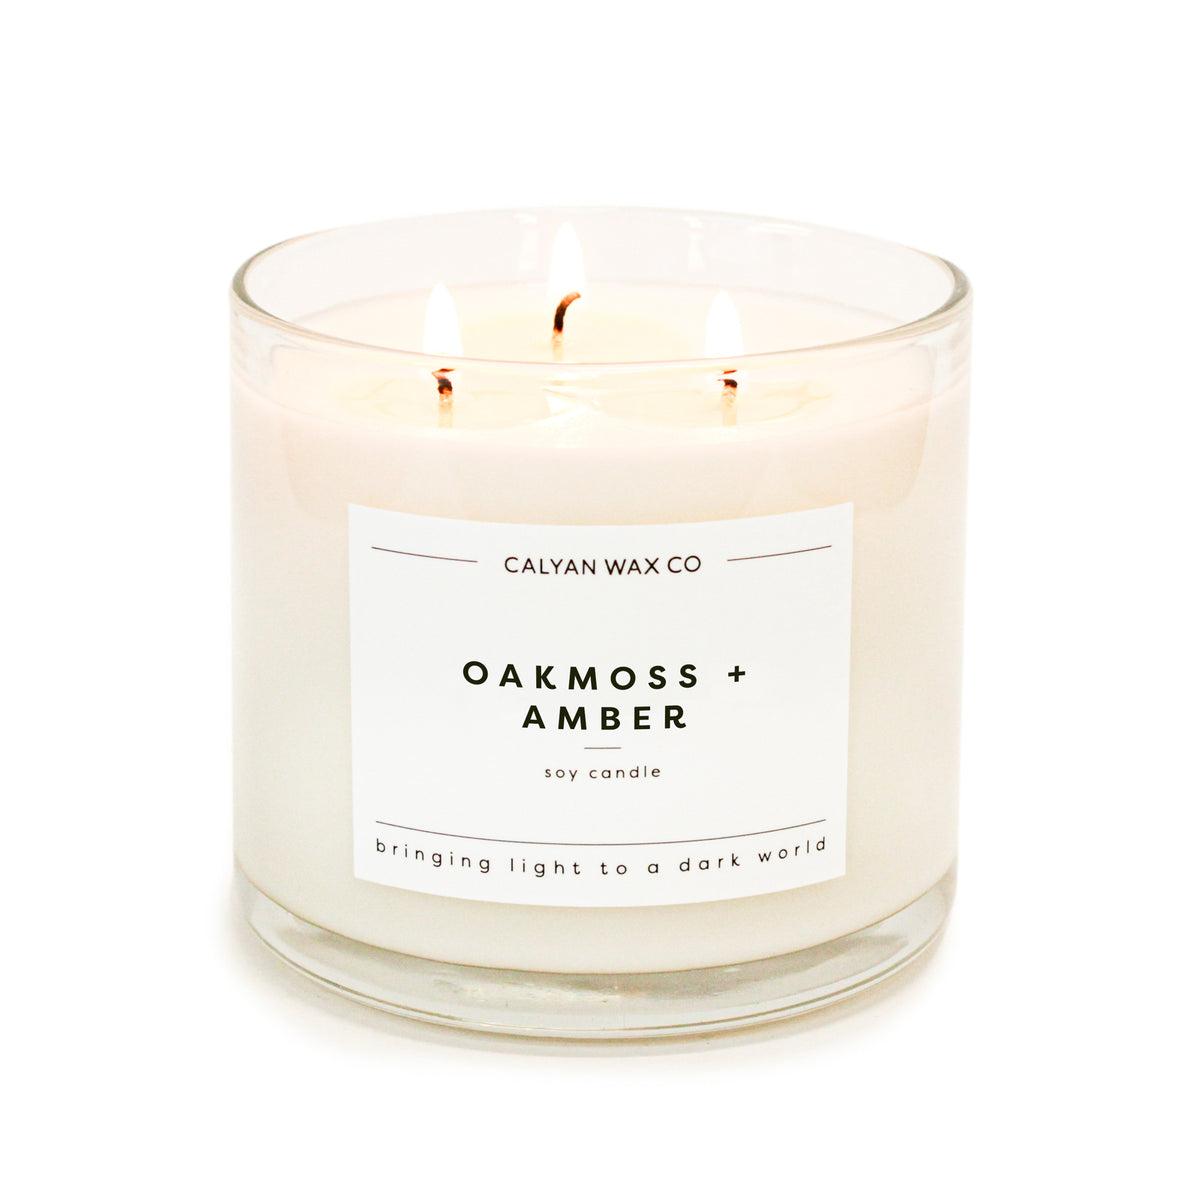 Oakmoss + Amber 15 oz. 3-Wick Clear Glass Soy Candle - Calyan Wax Co.